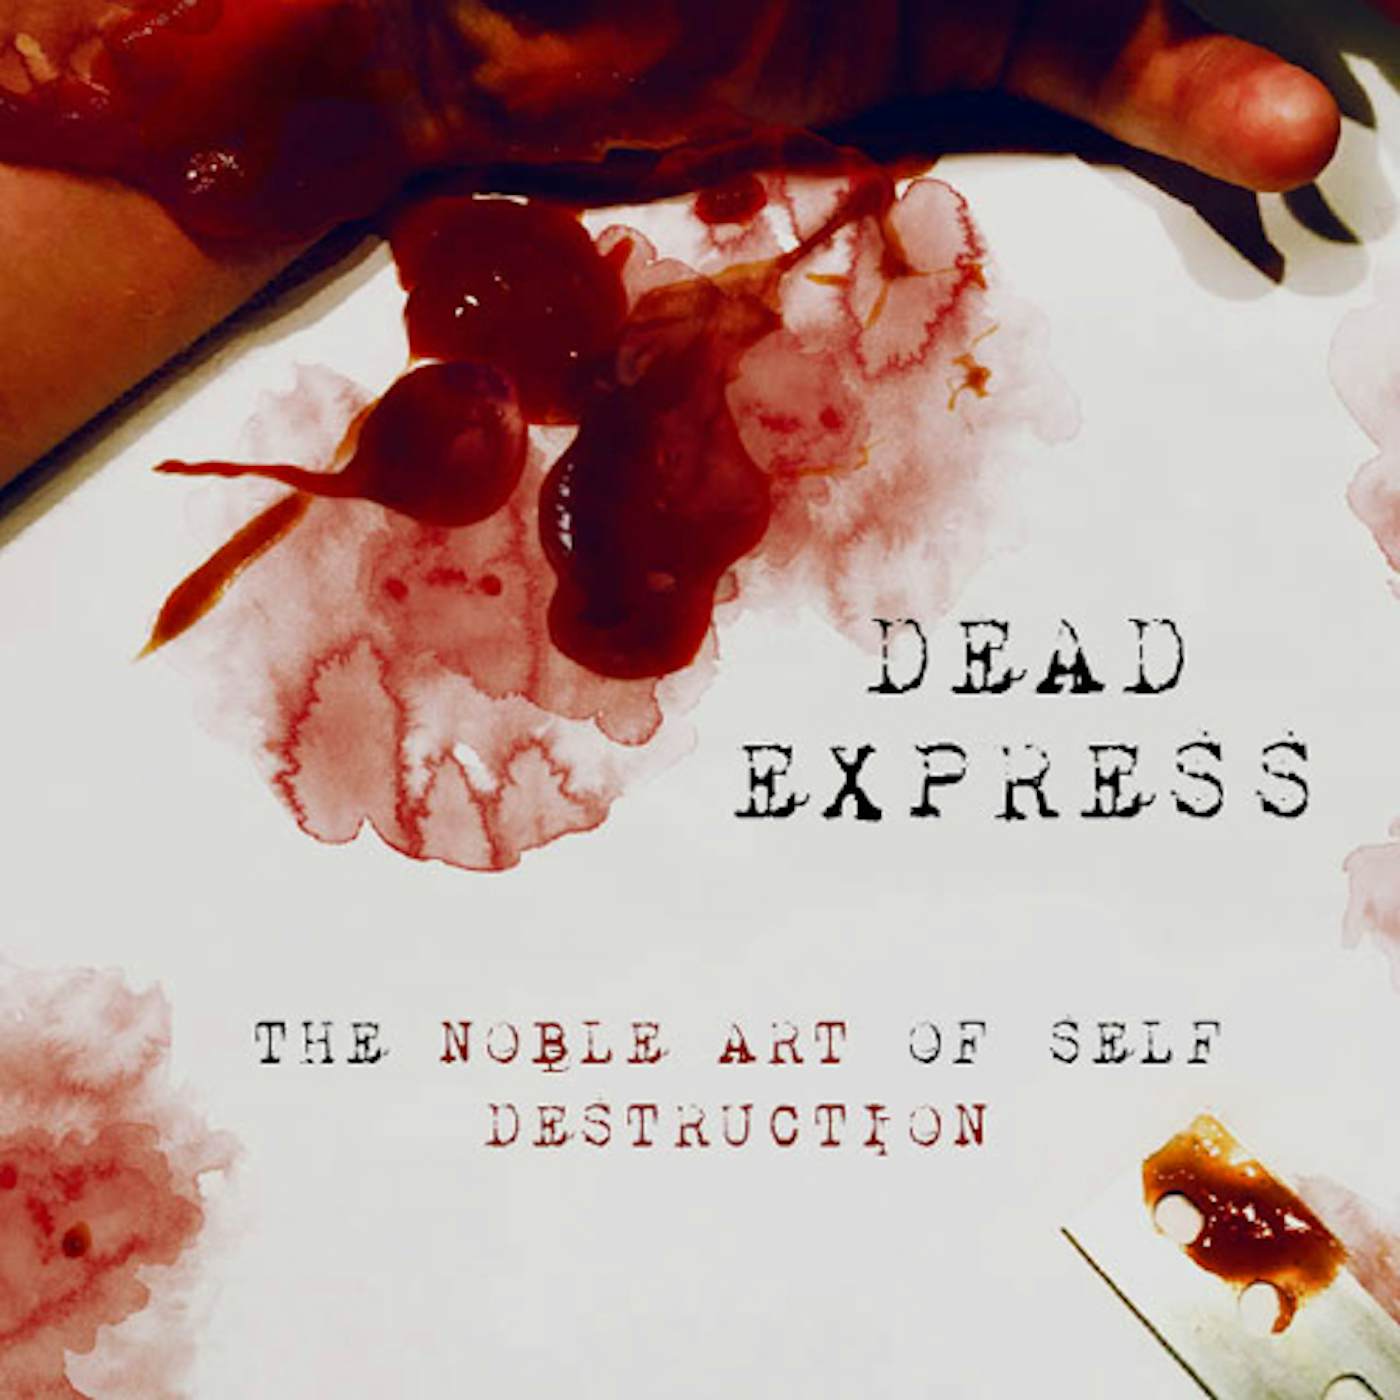 Dead Express THE NOBLE ART OF SELF DESTRUCTION CD